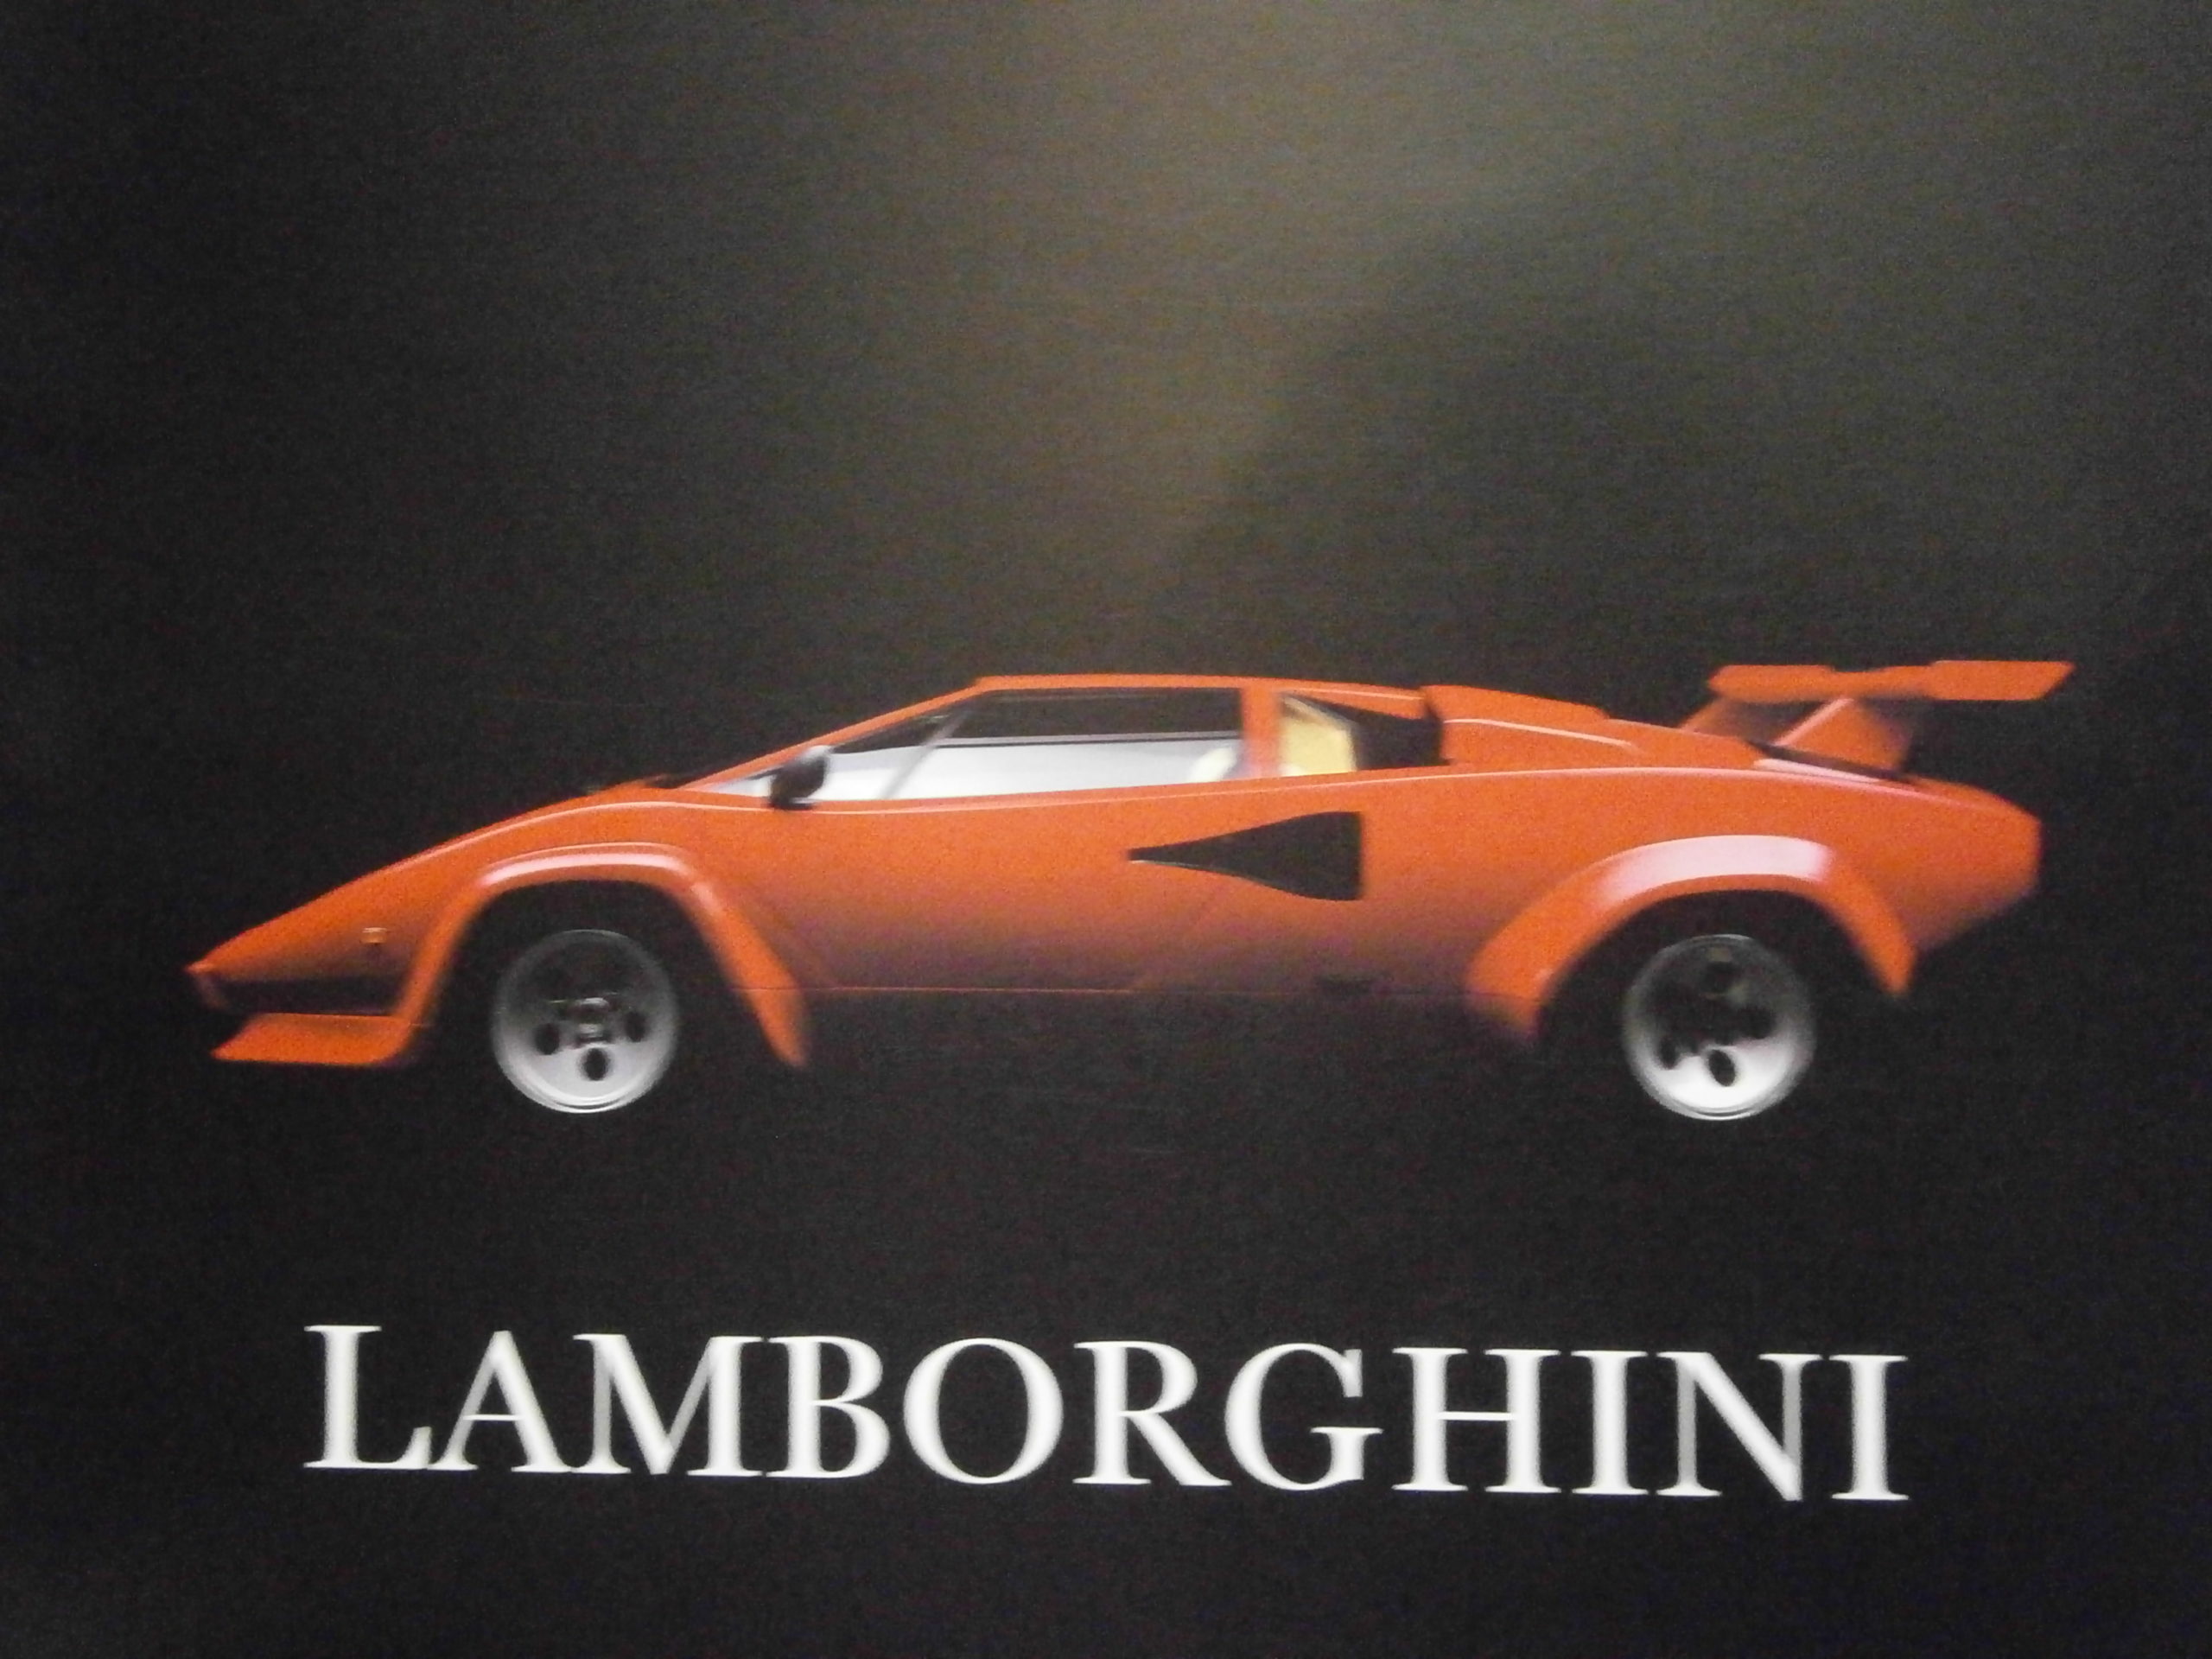 Red Lamborghini Poster 